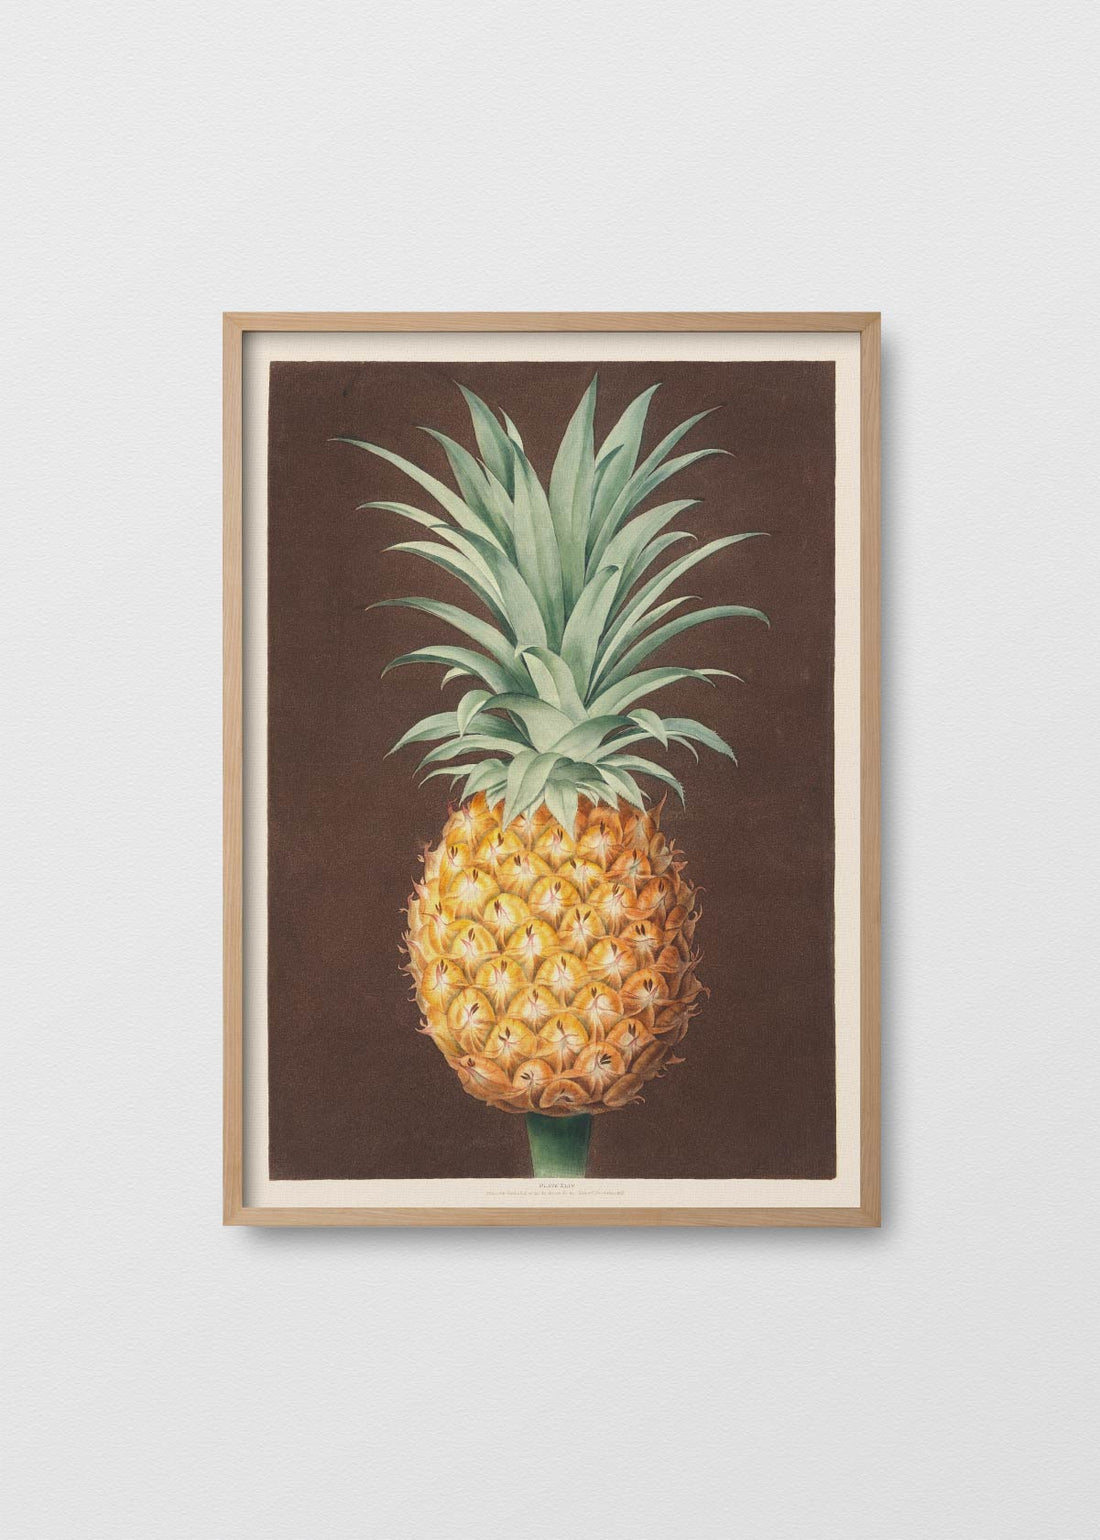 Pineapple N1 - Testimoniaprints